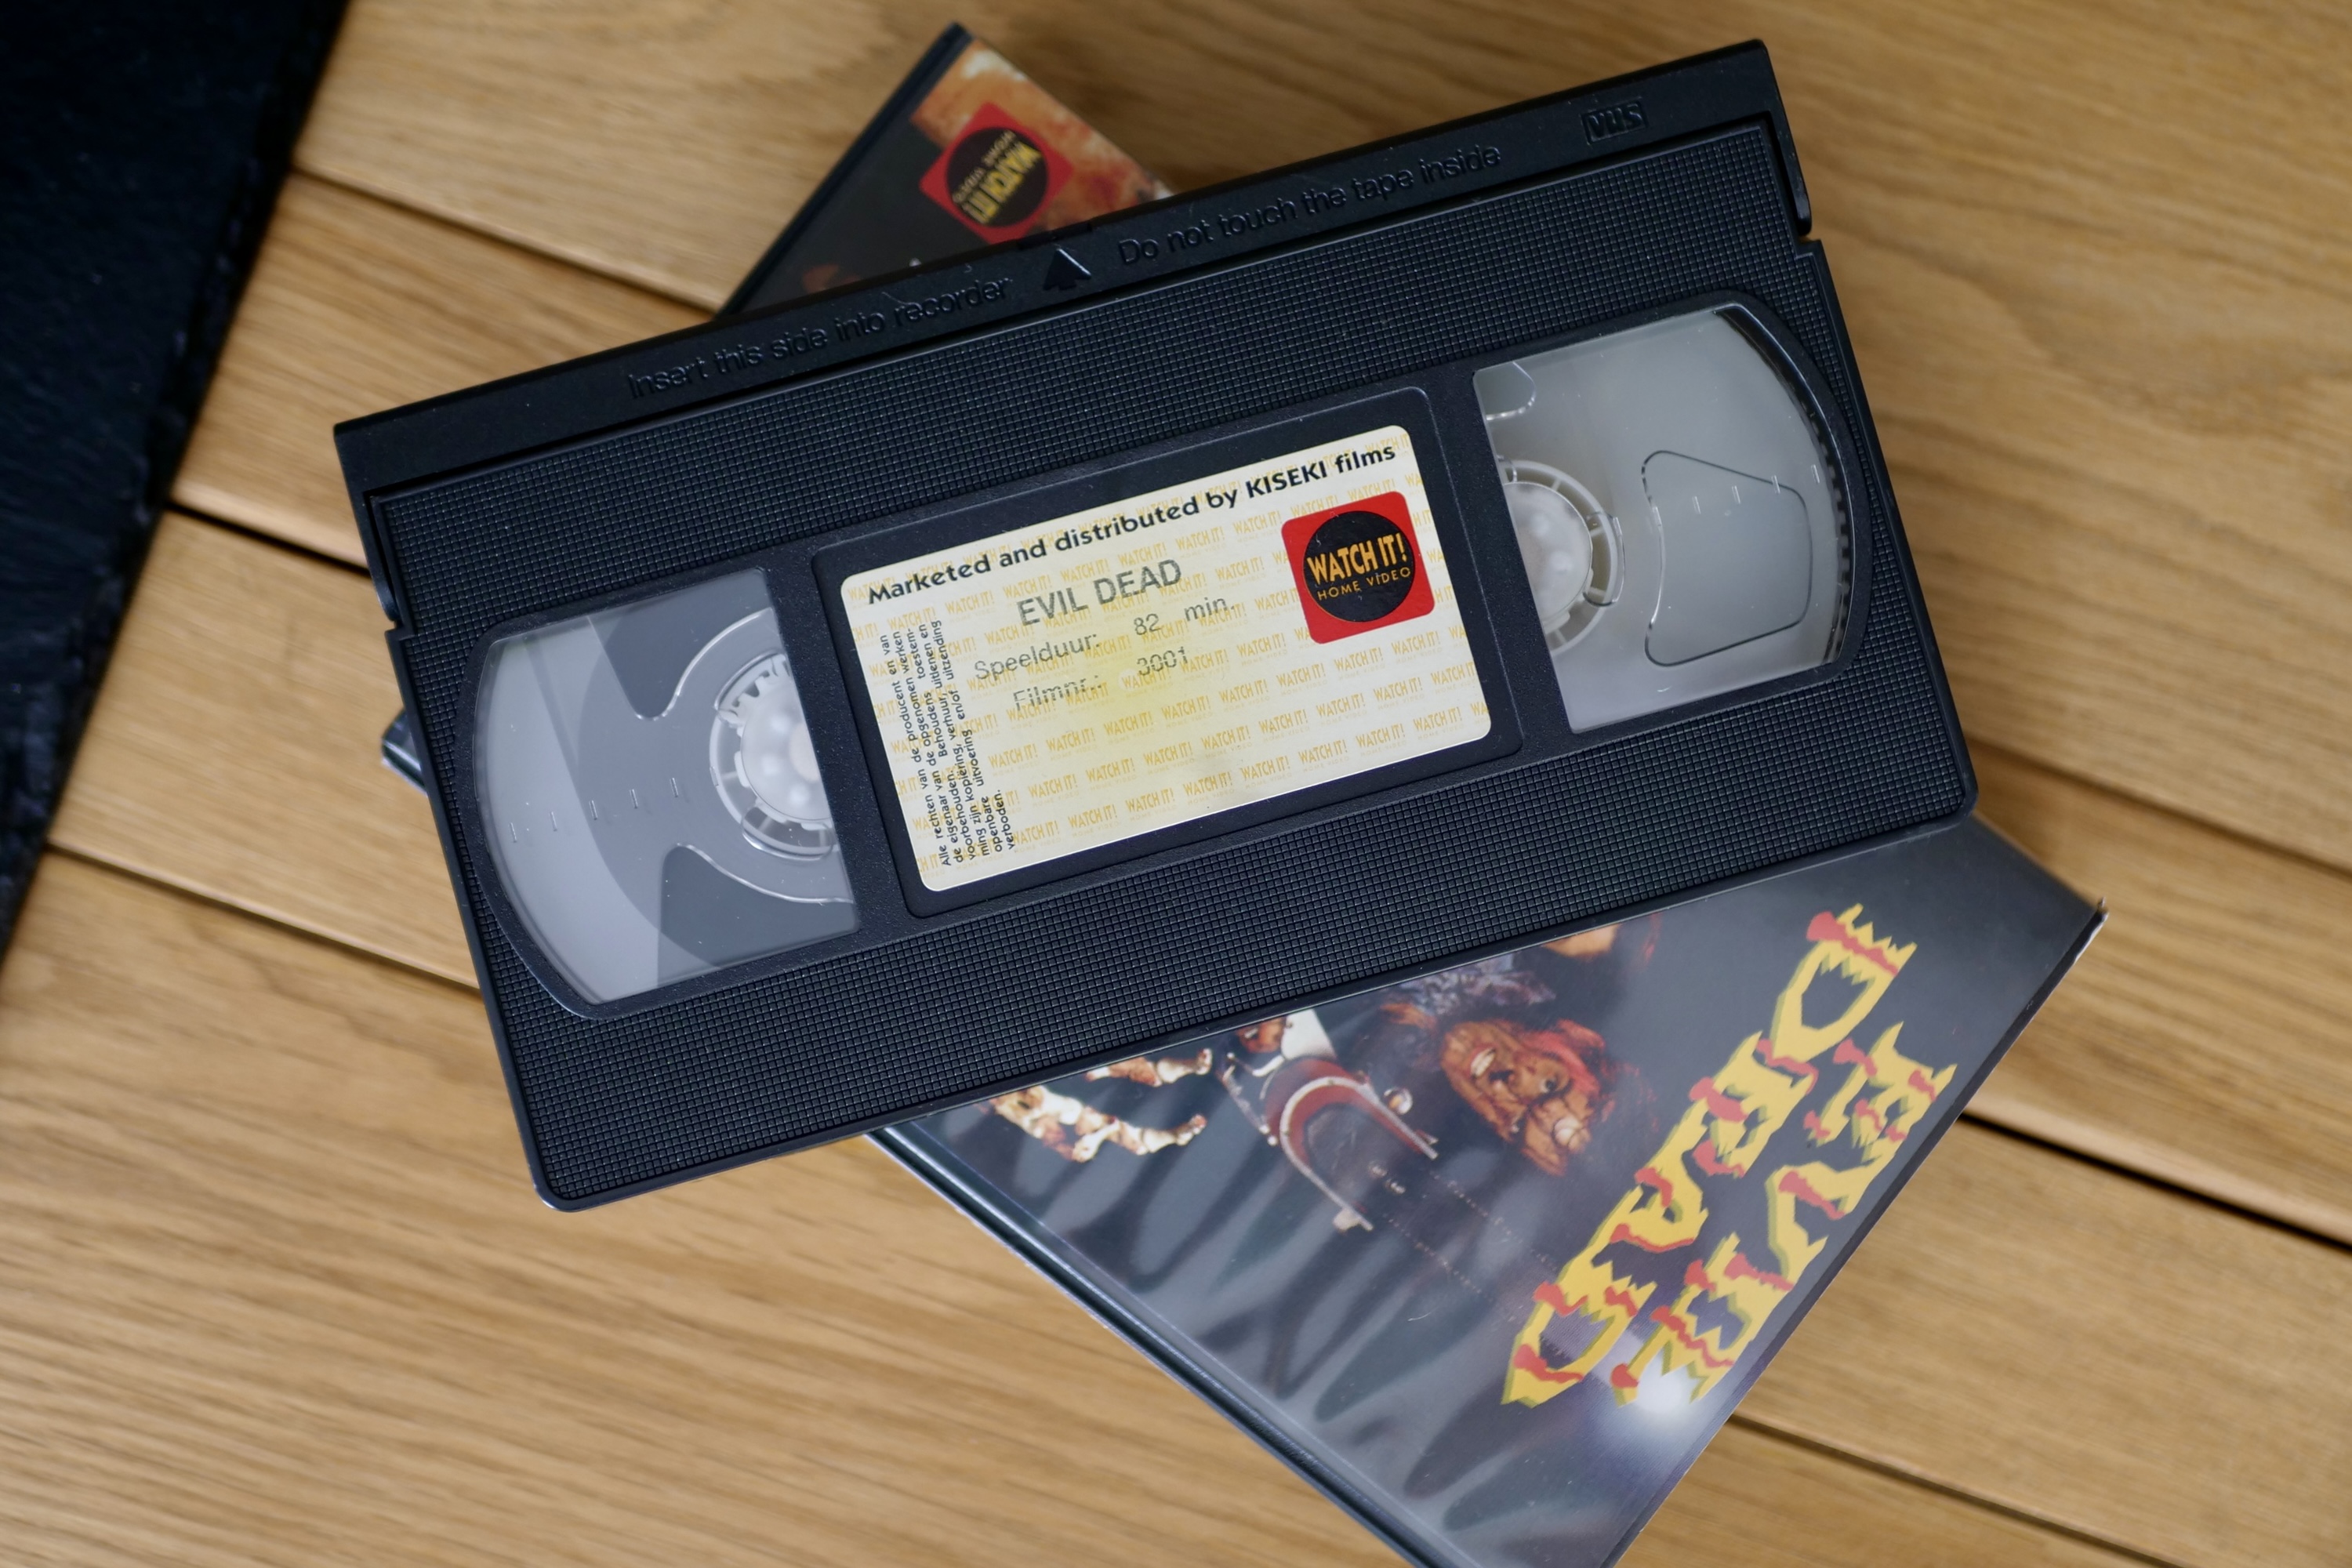 An Evil Dead VHS cassette.